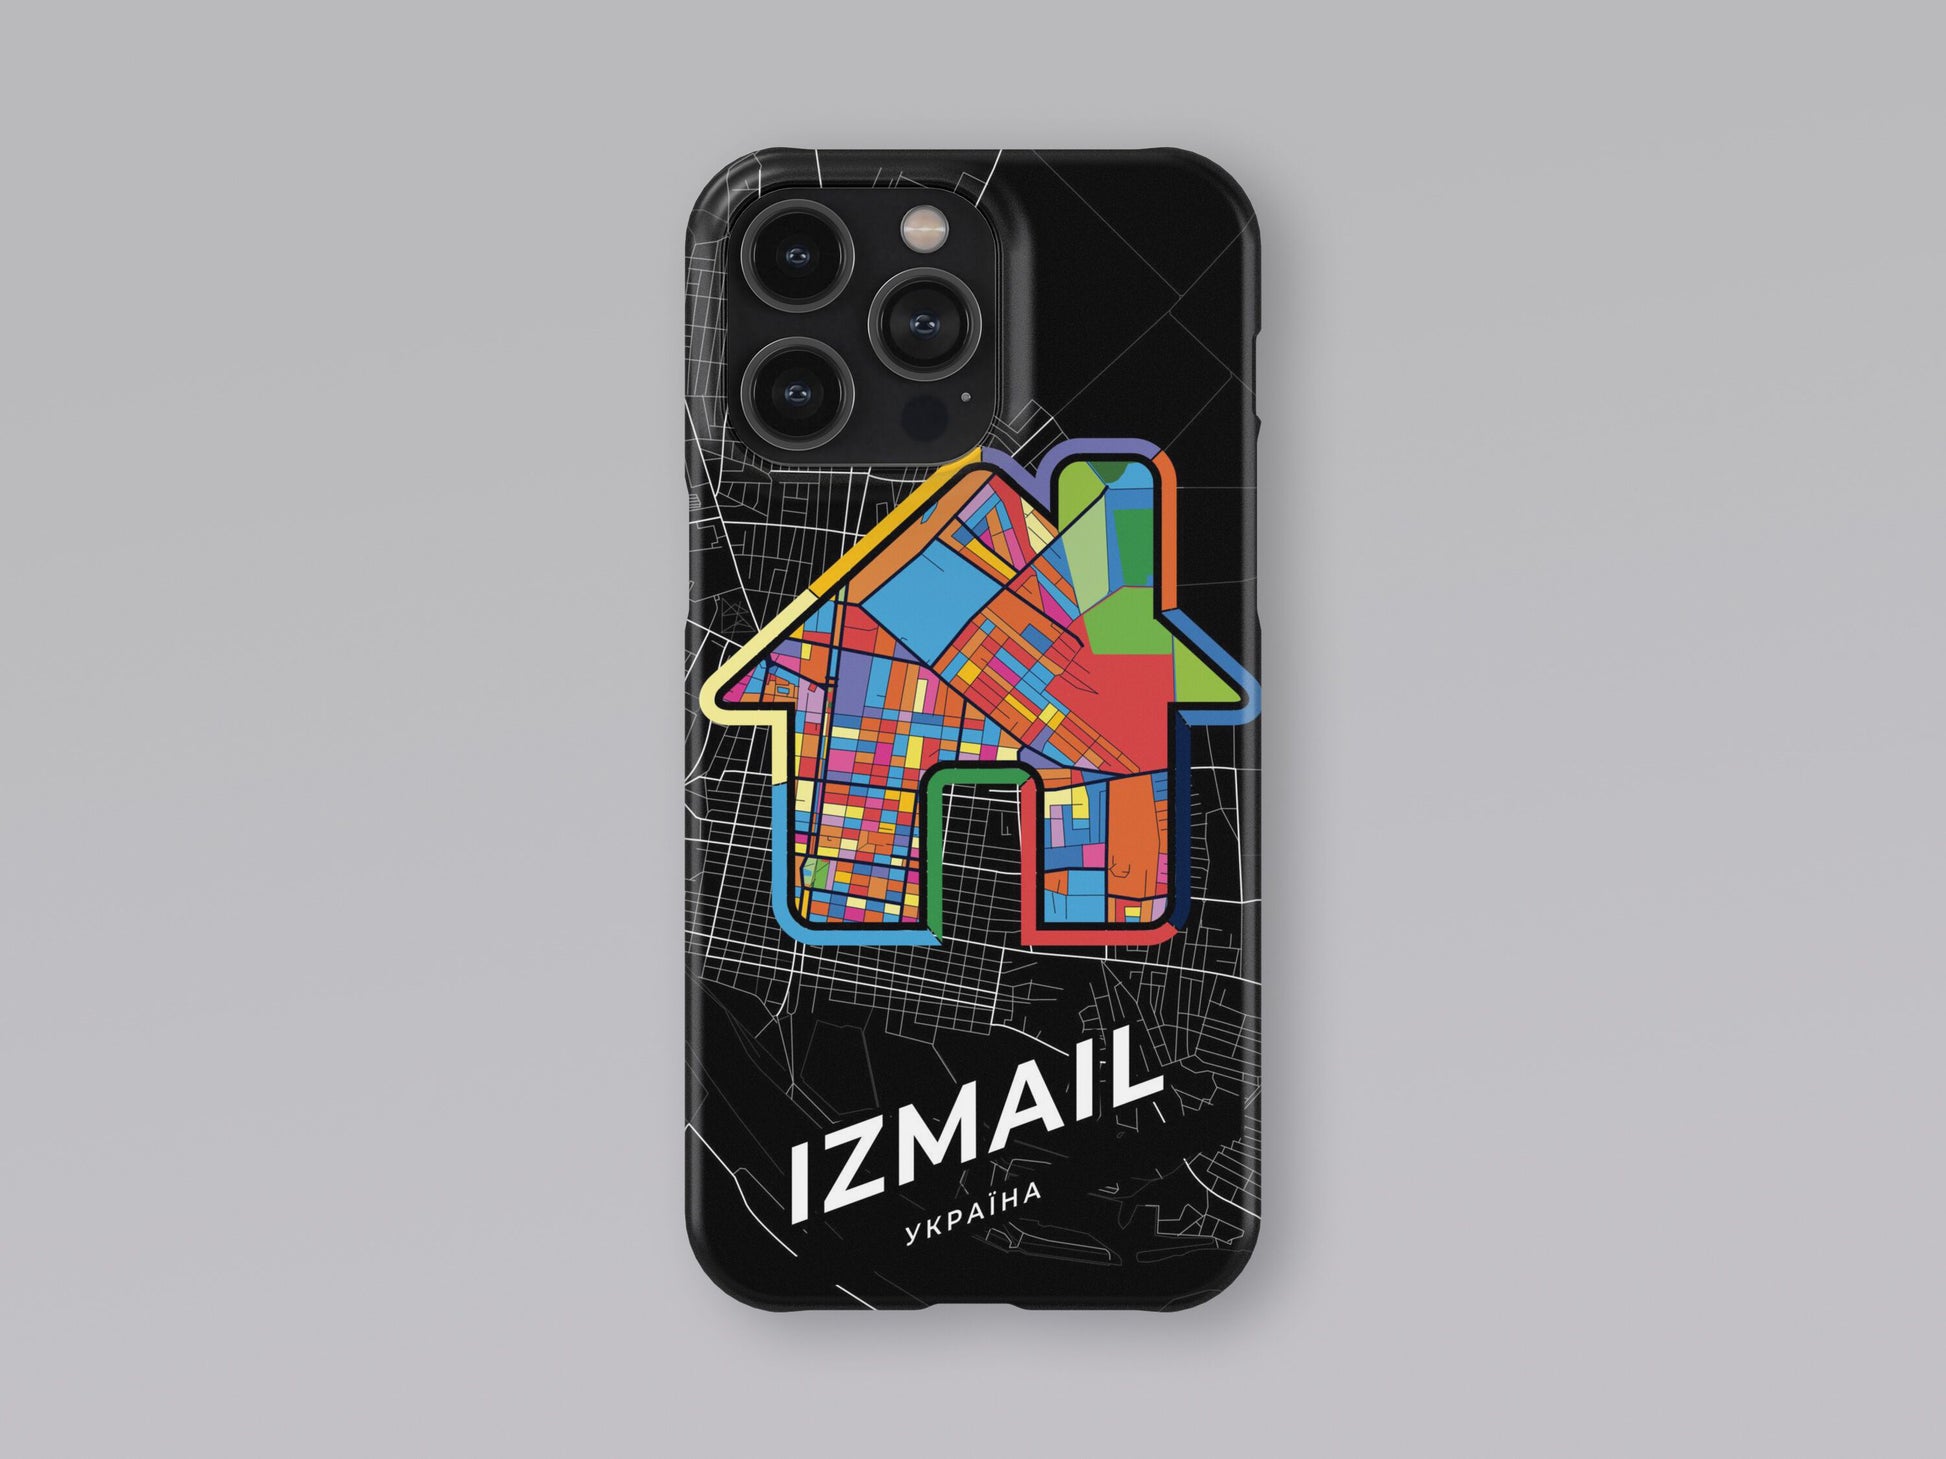 Izmail Ukraine slim phone case with colorful icon. Birthday, wedding or housewarming gift. Couple match cases. 3